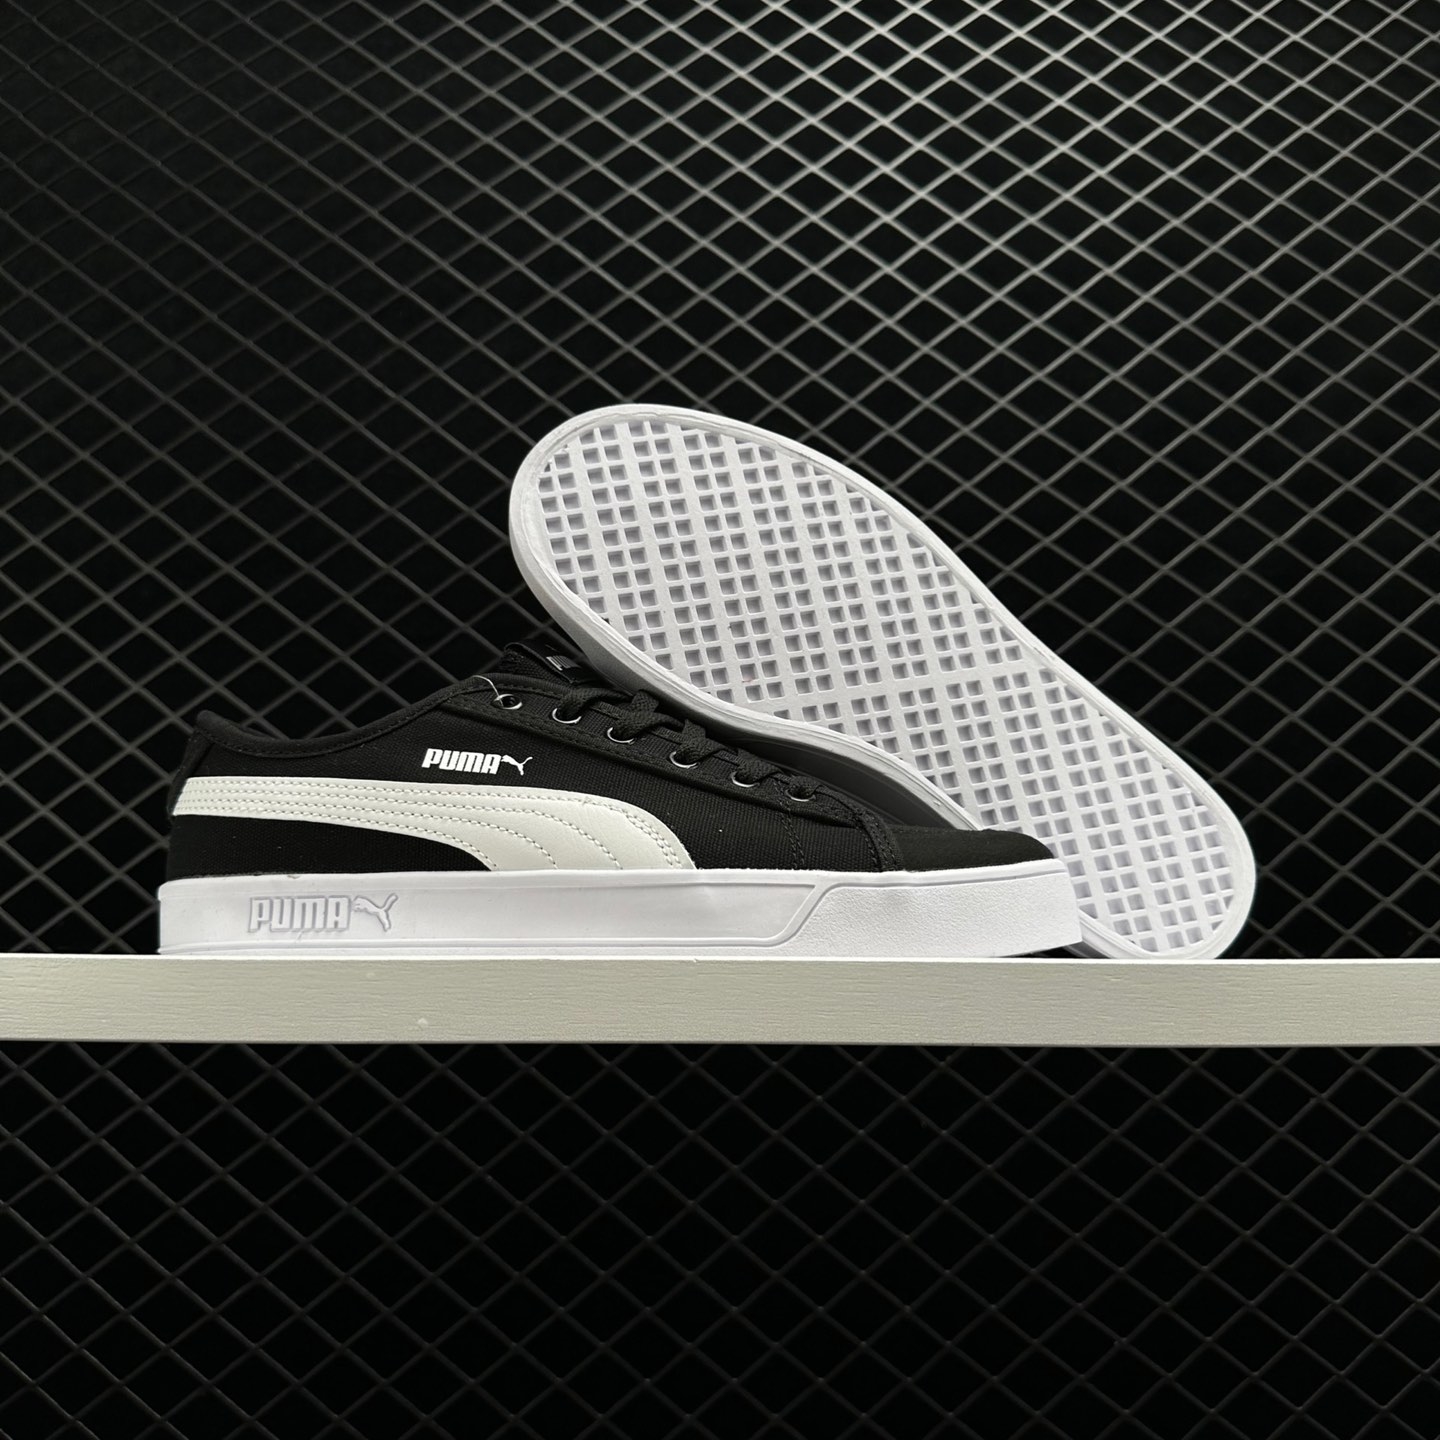 Puma Smash v2 Vulc CV 365968 01 - Black White Sneakers | Shop Now!